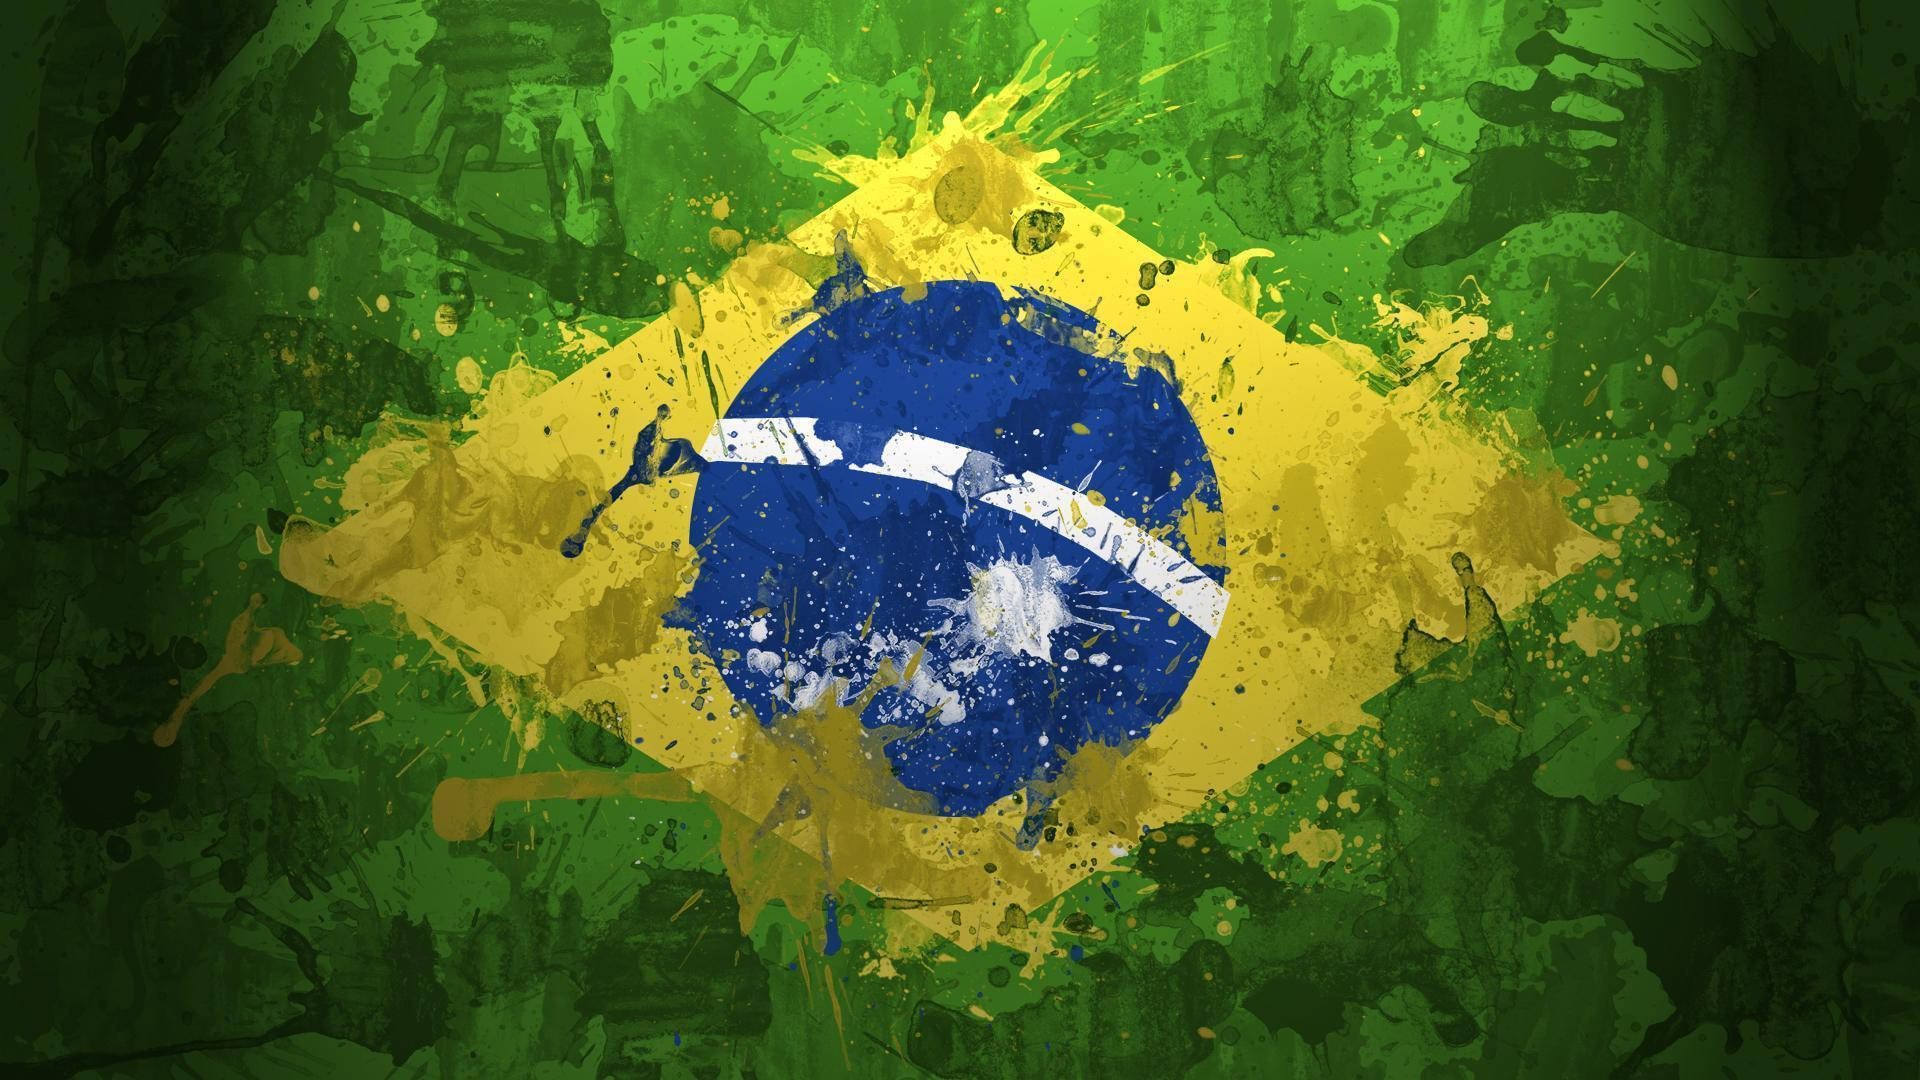 Caption: Vibrant Cartoon Illustration of the Brazilian Flag in Textile Form Wallpaper